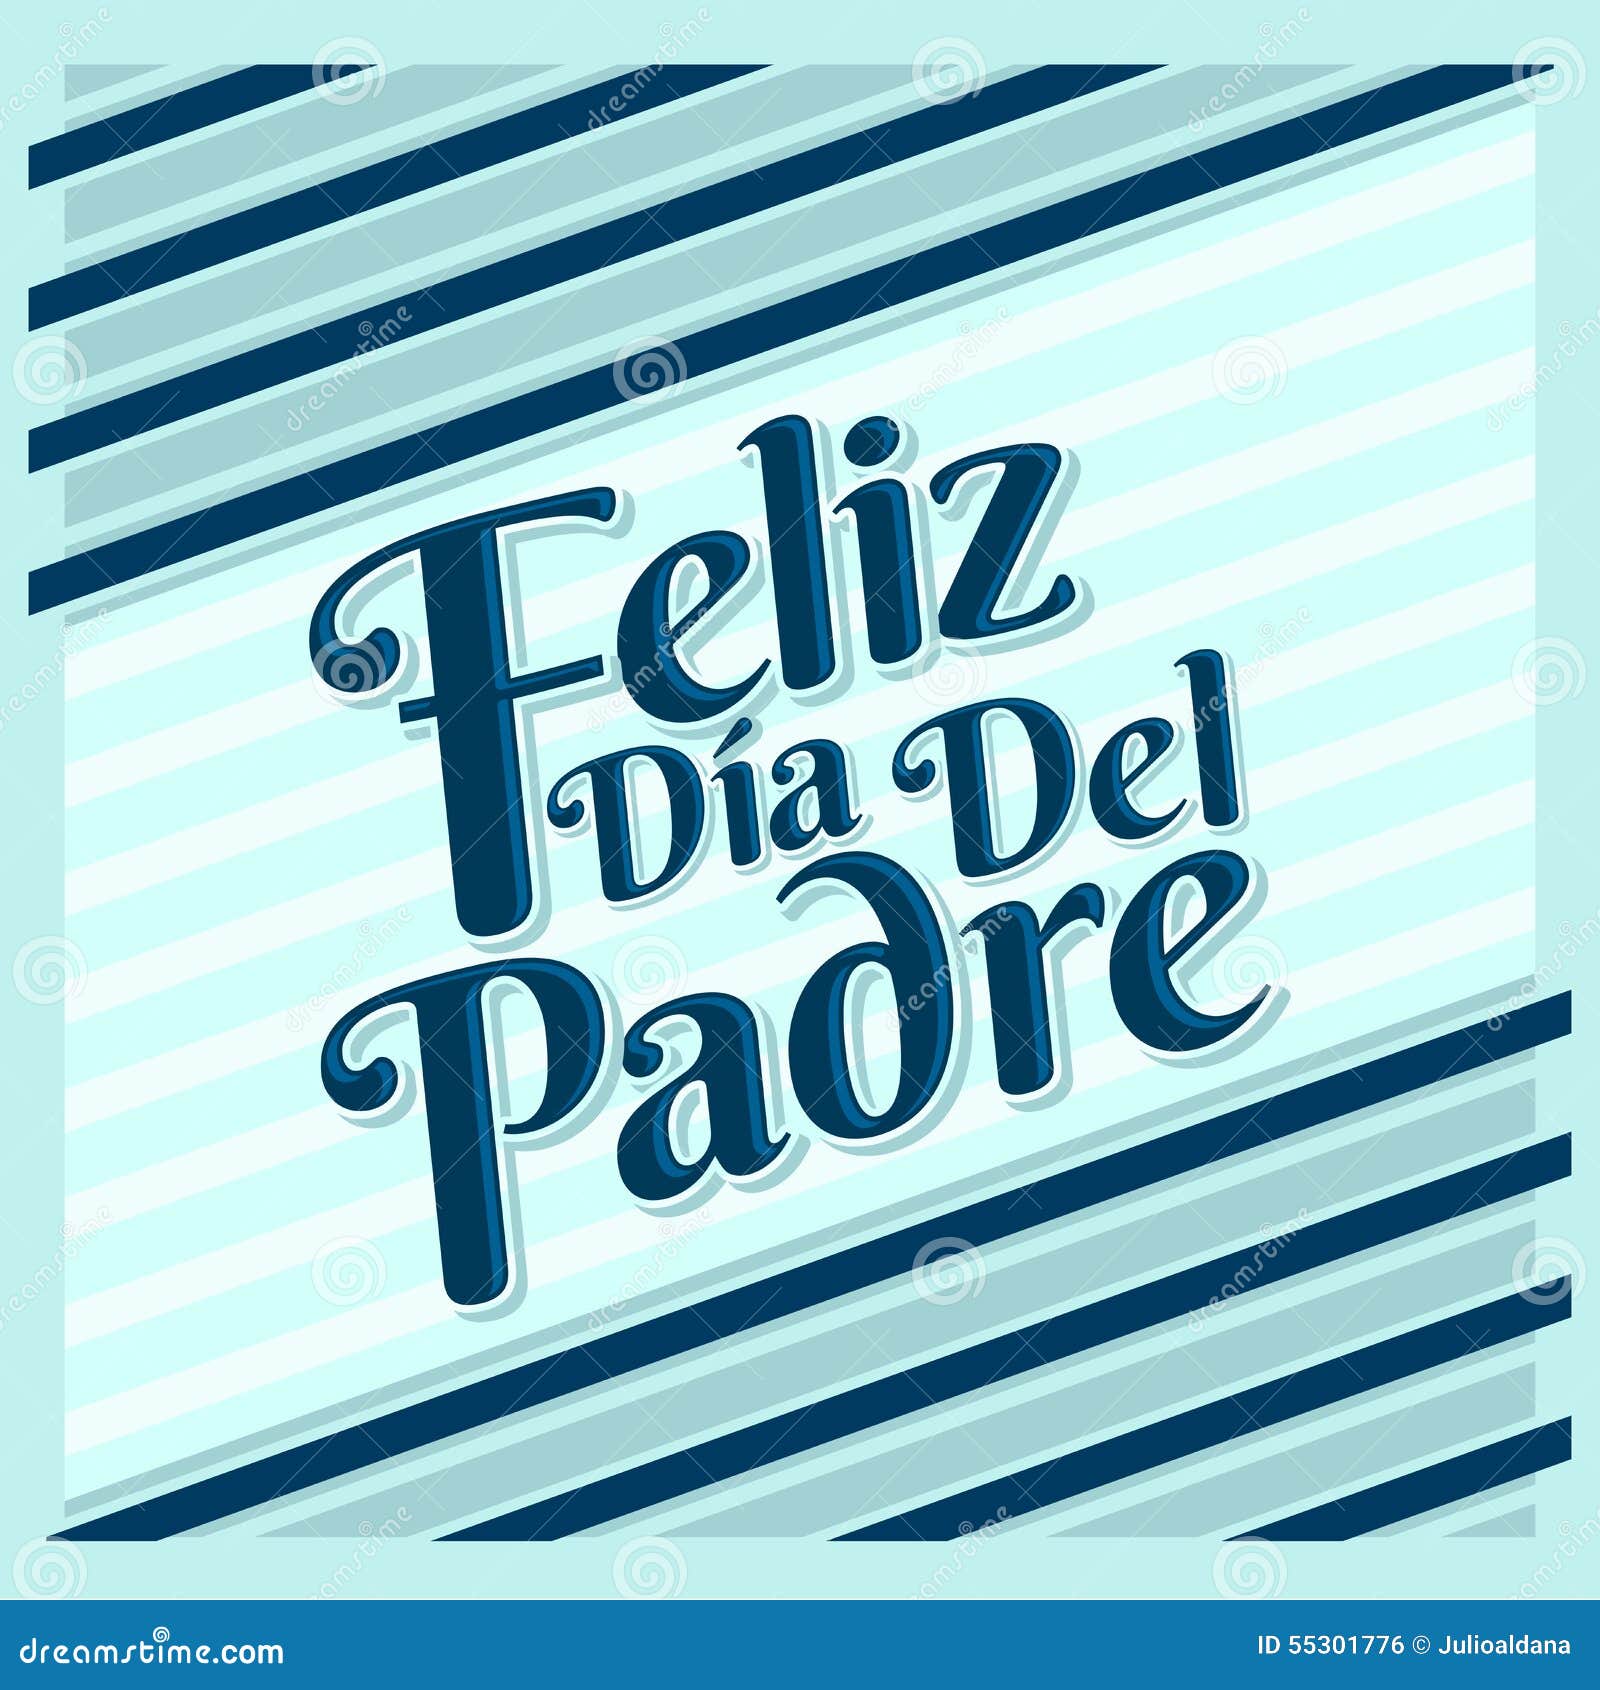 Feliz Dia De Padre Happy Fathers Day Spanish Text Stock Vector